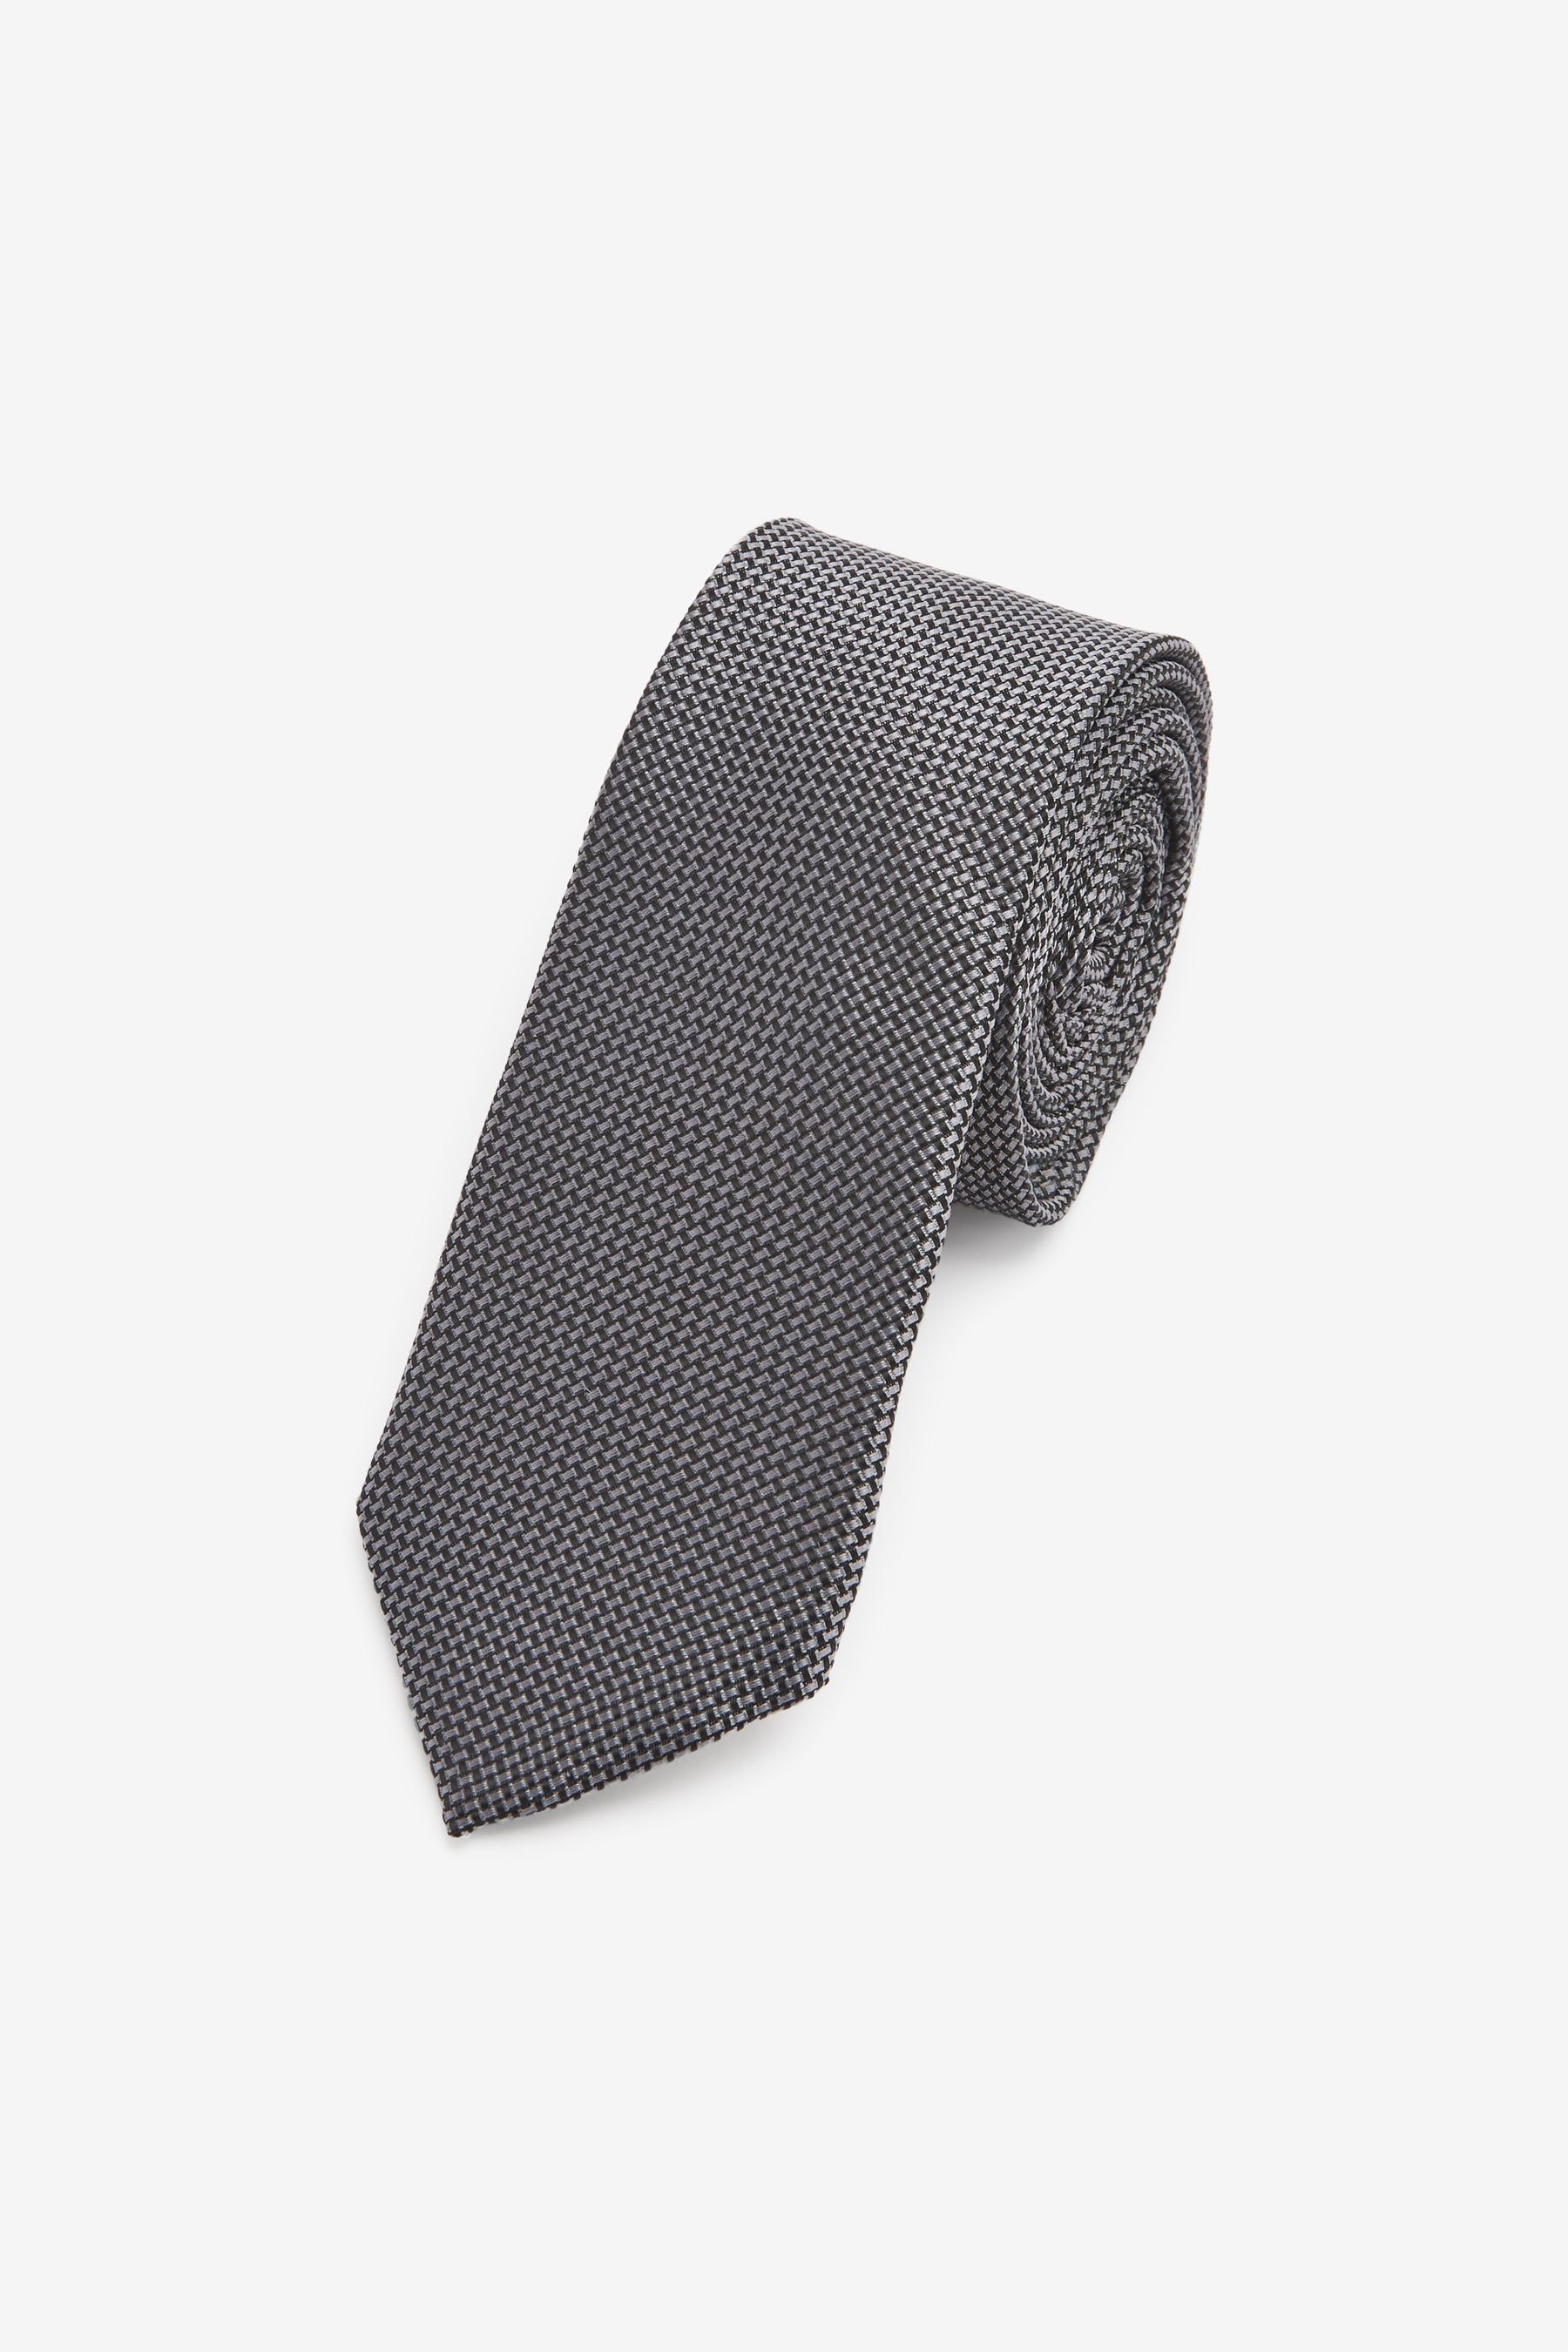 Next Krawatte Signature Strukturierte Seidenkrawatte (1-St) Charcoal Grey Texture